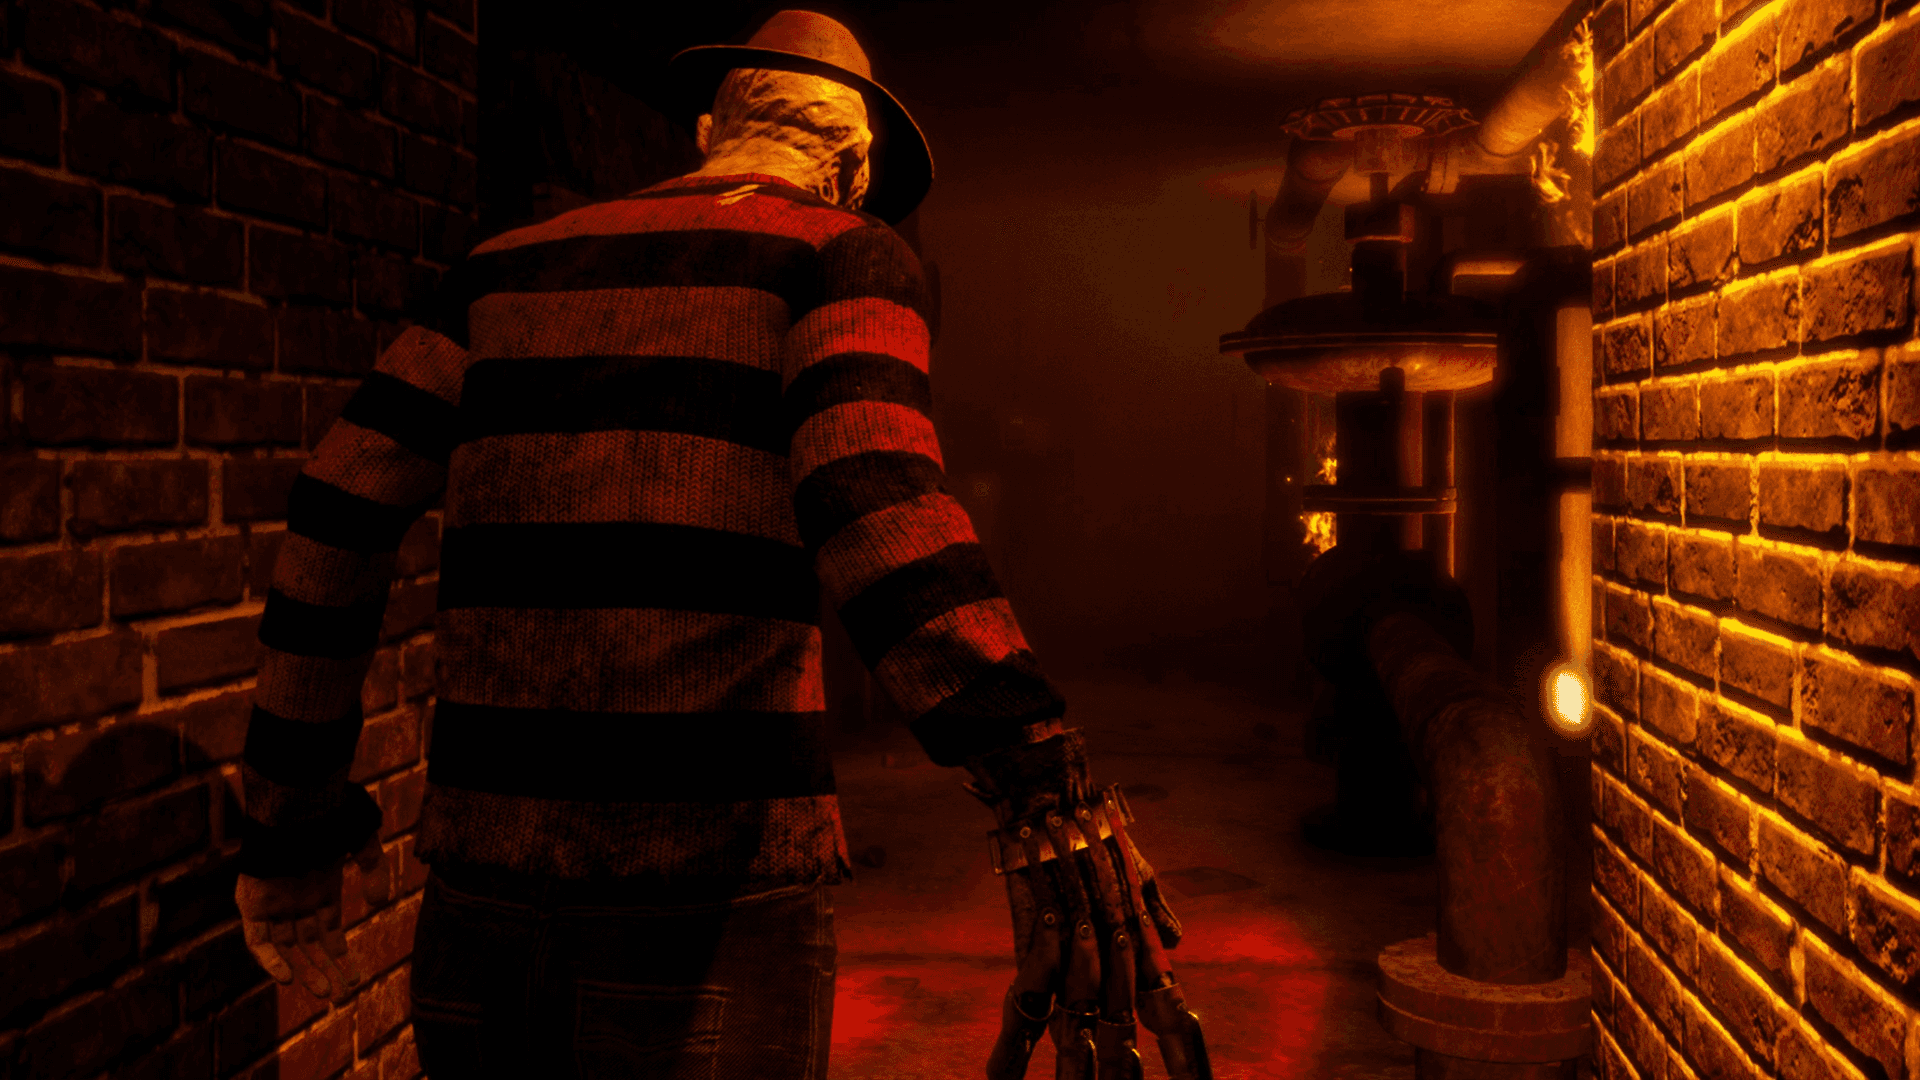 Freddy Krueger Standing Ominously In A Foggy Atmosphere